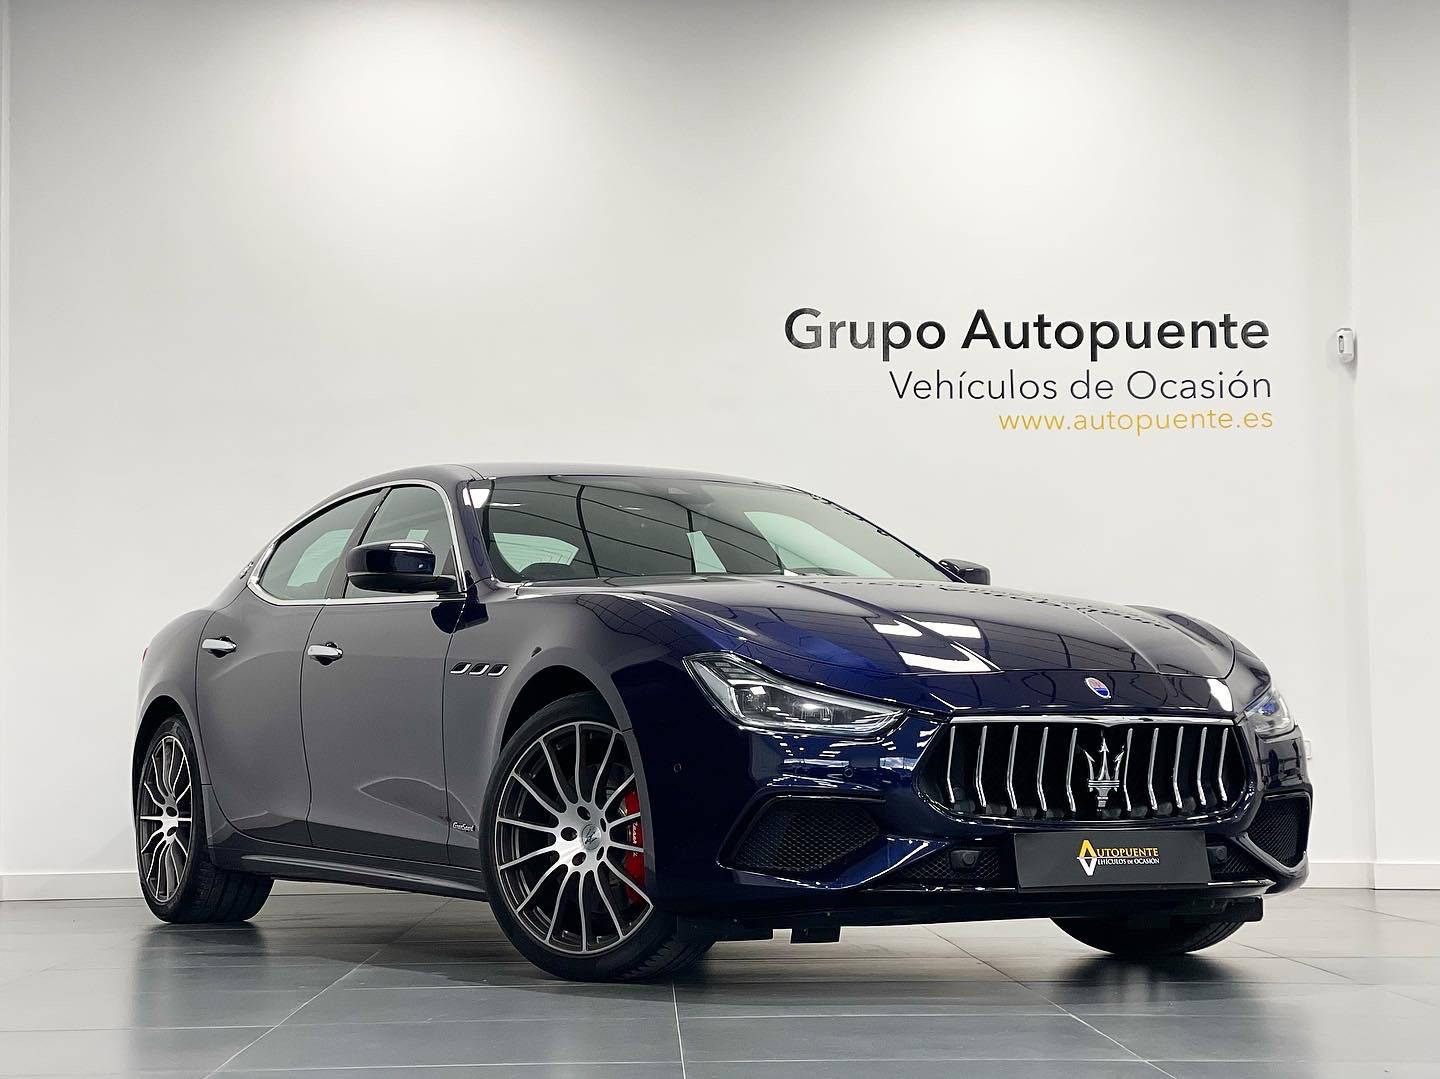 Maserati 45990€ - Segunda mano y ocasión